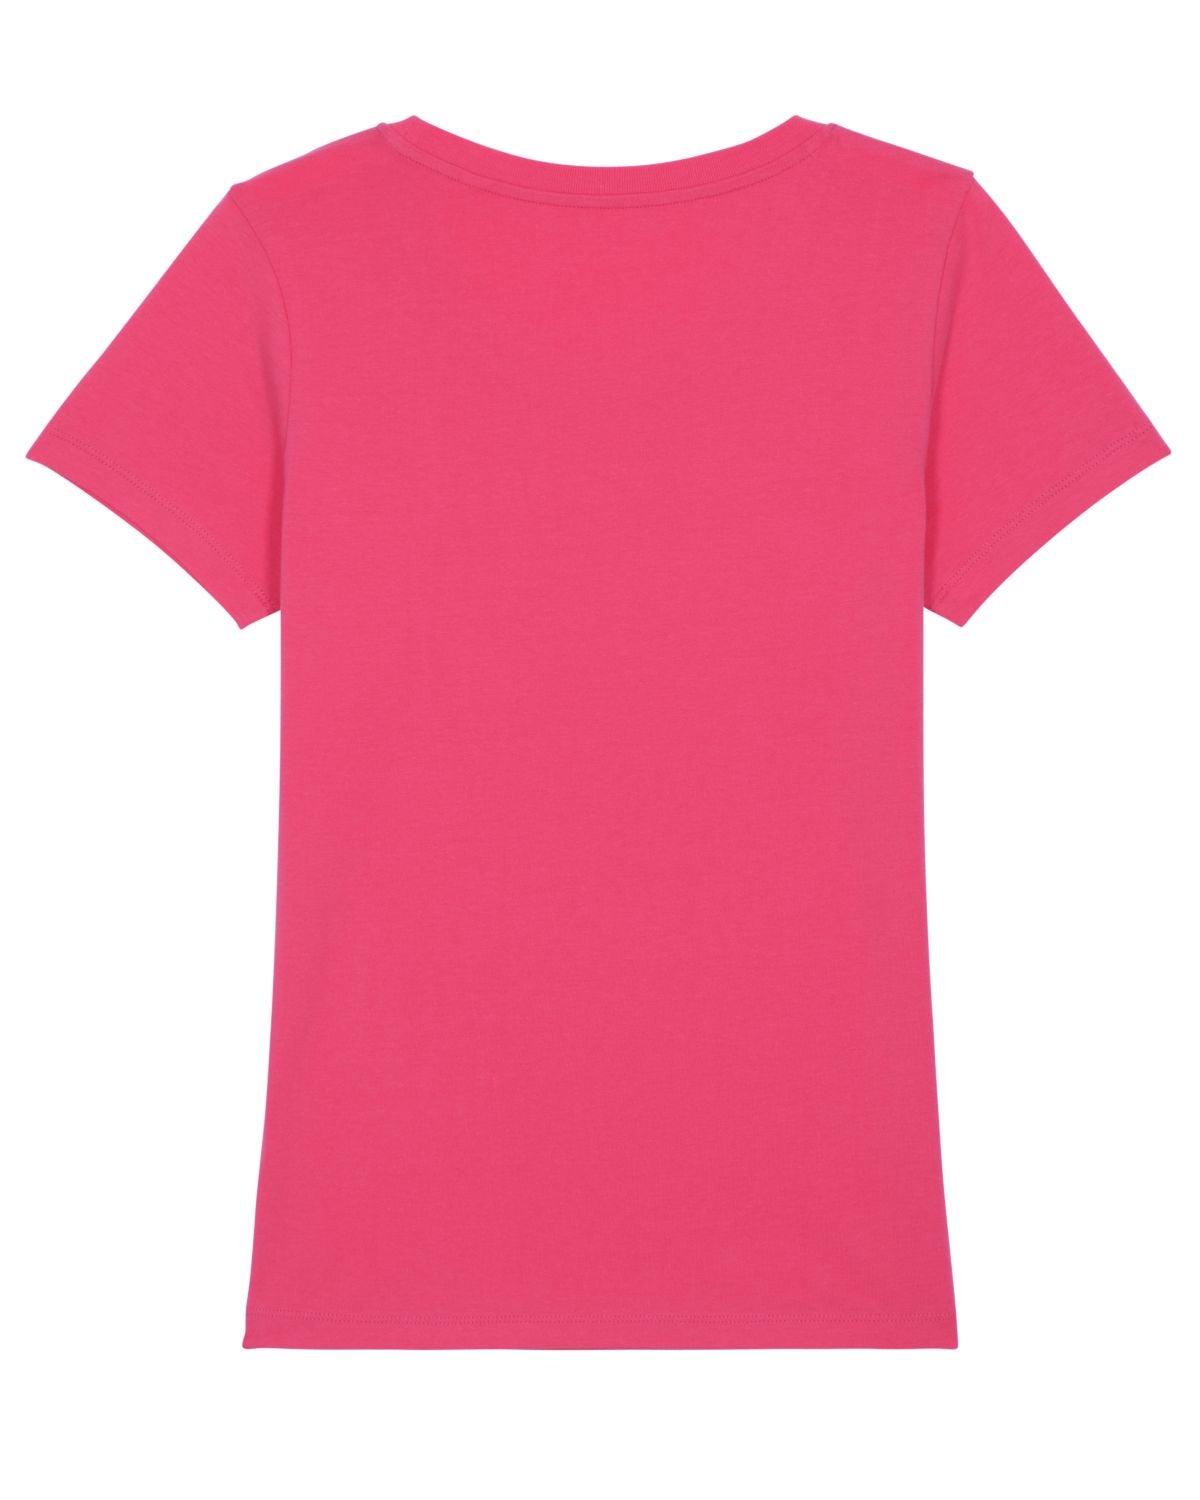 DEERN Shirt Pink Punch M